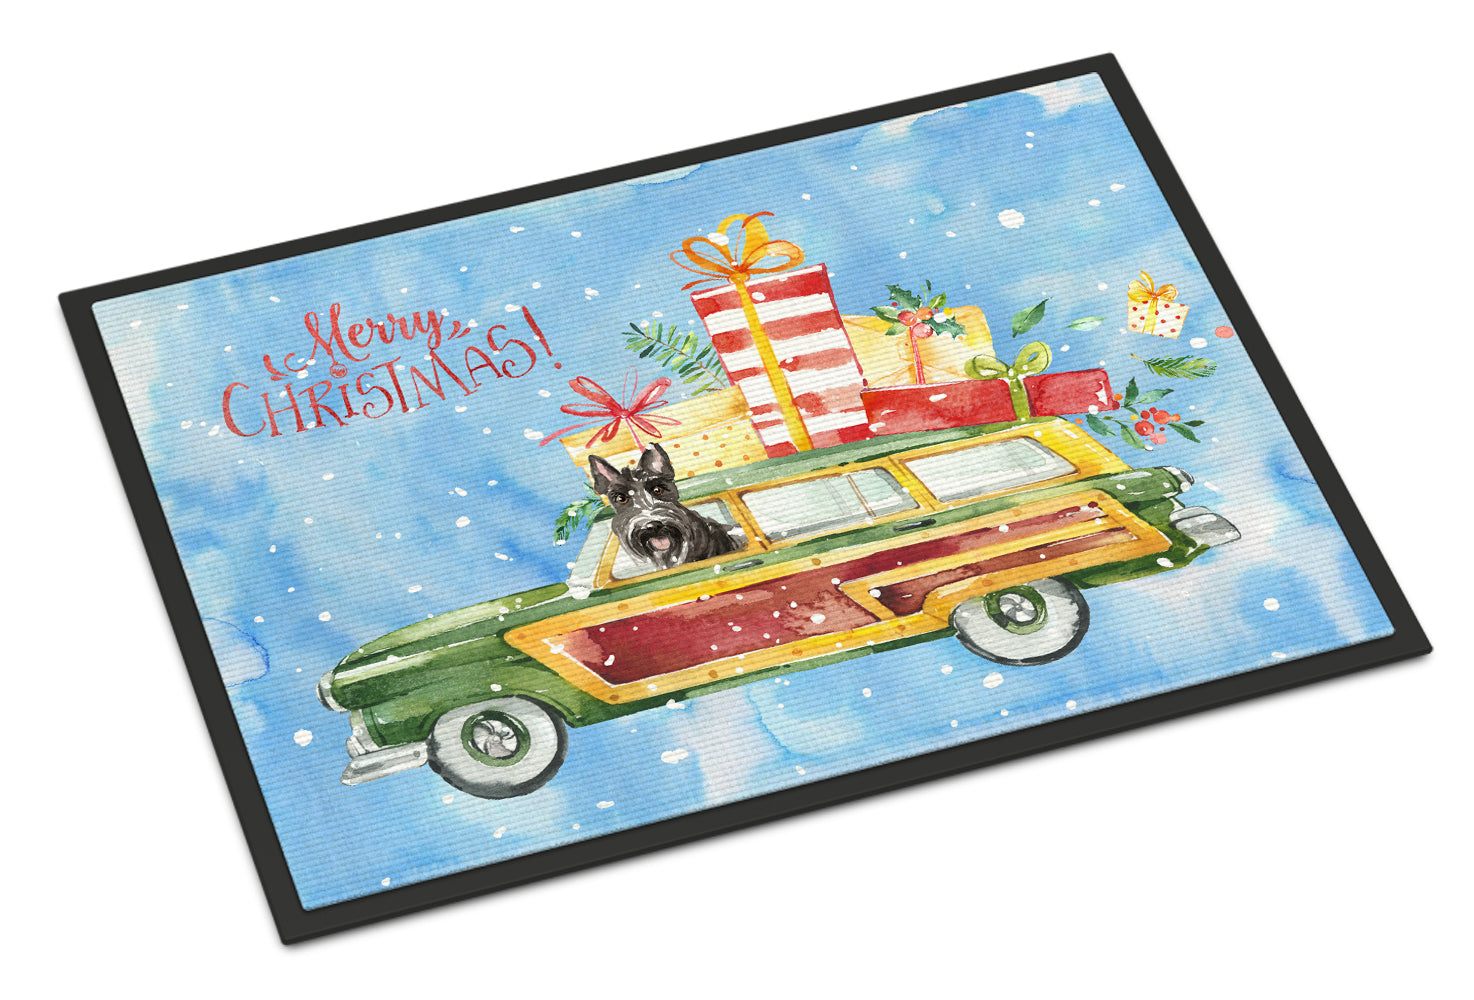 Merry Christmas Scottish Terrier Indoor or Outdoor Mat 18x27 CK2420MAT - the-store.com